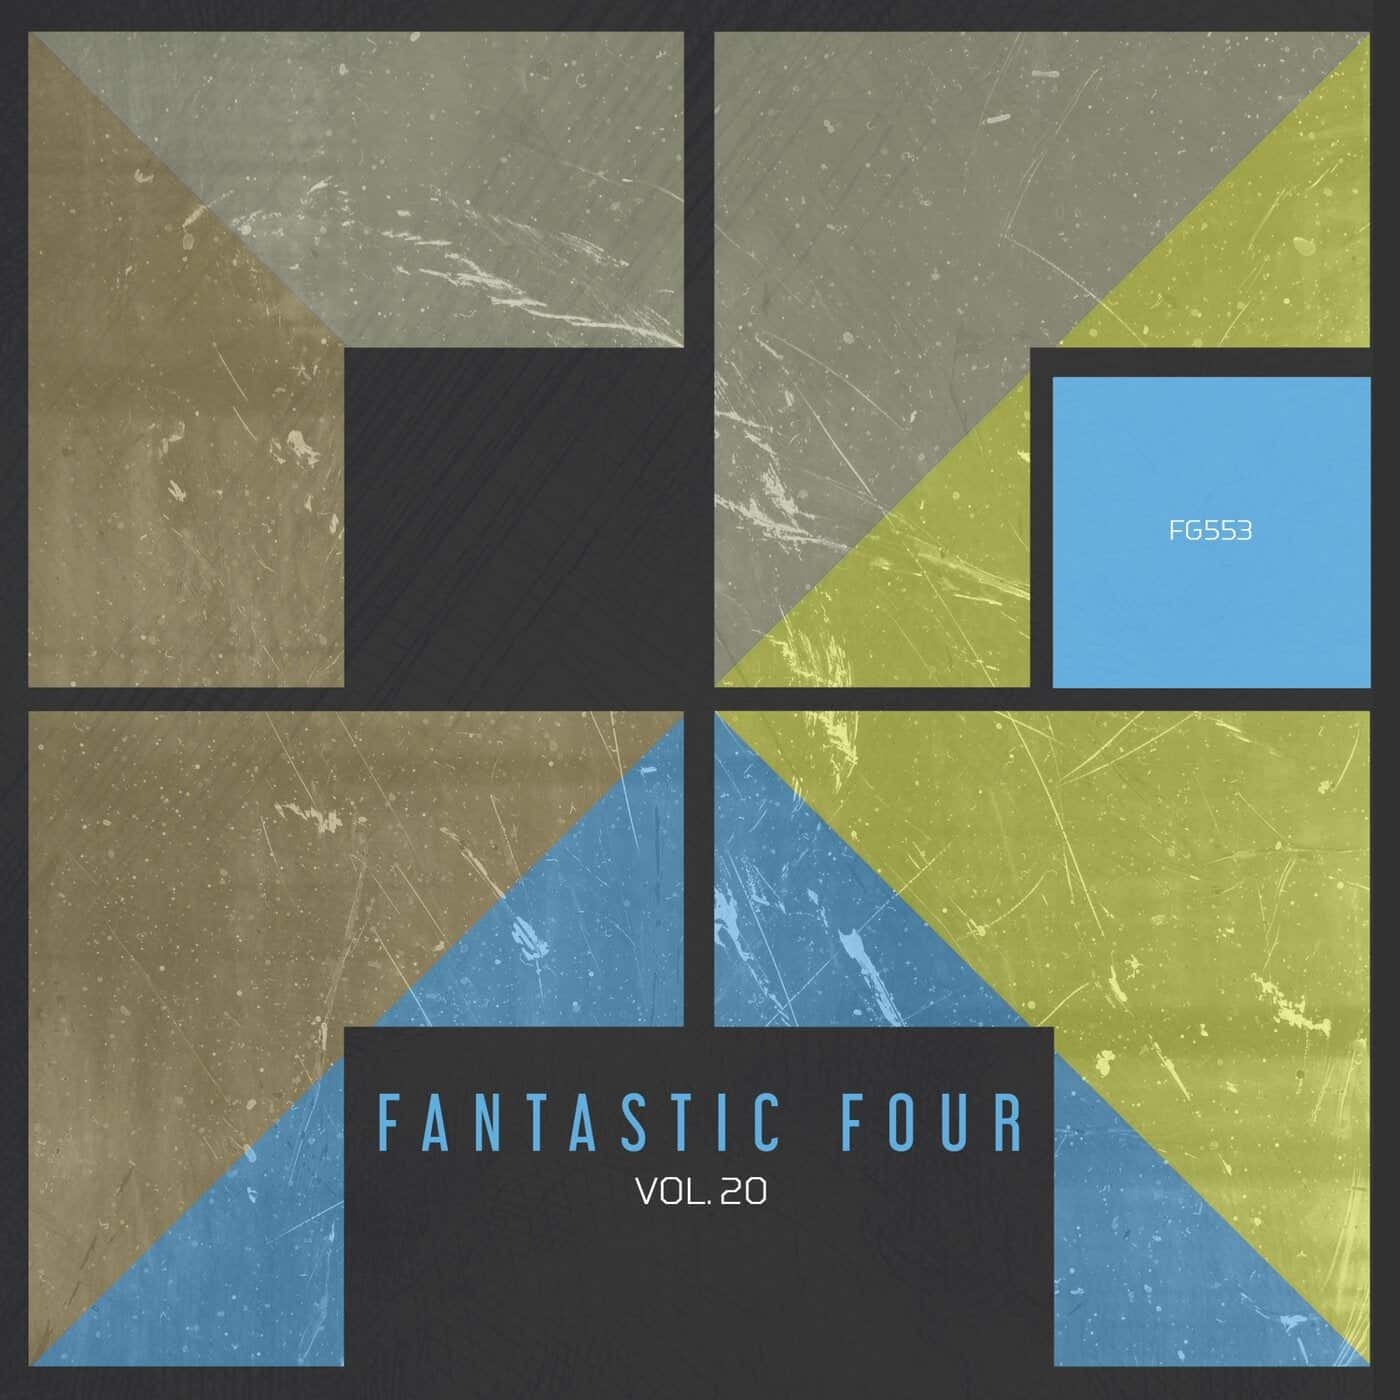 Download Fantastic Four, Vol. 20 on Electrobuzz